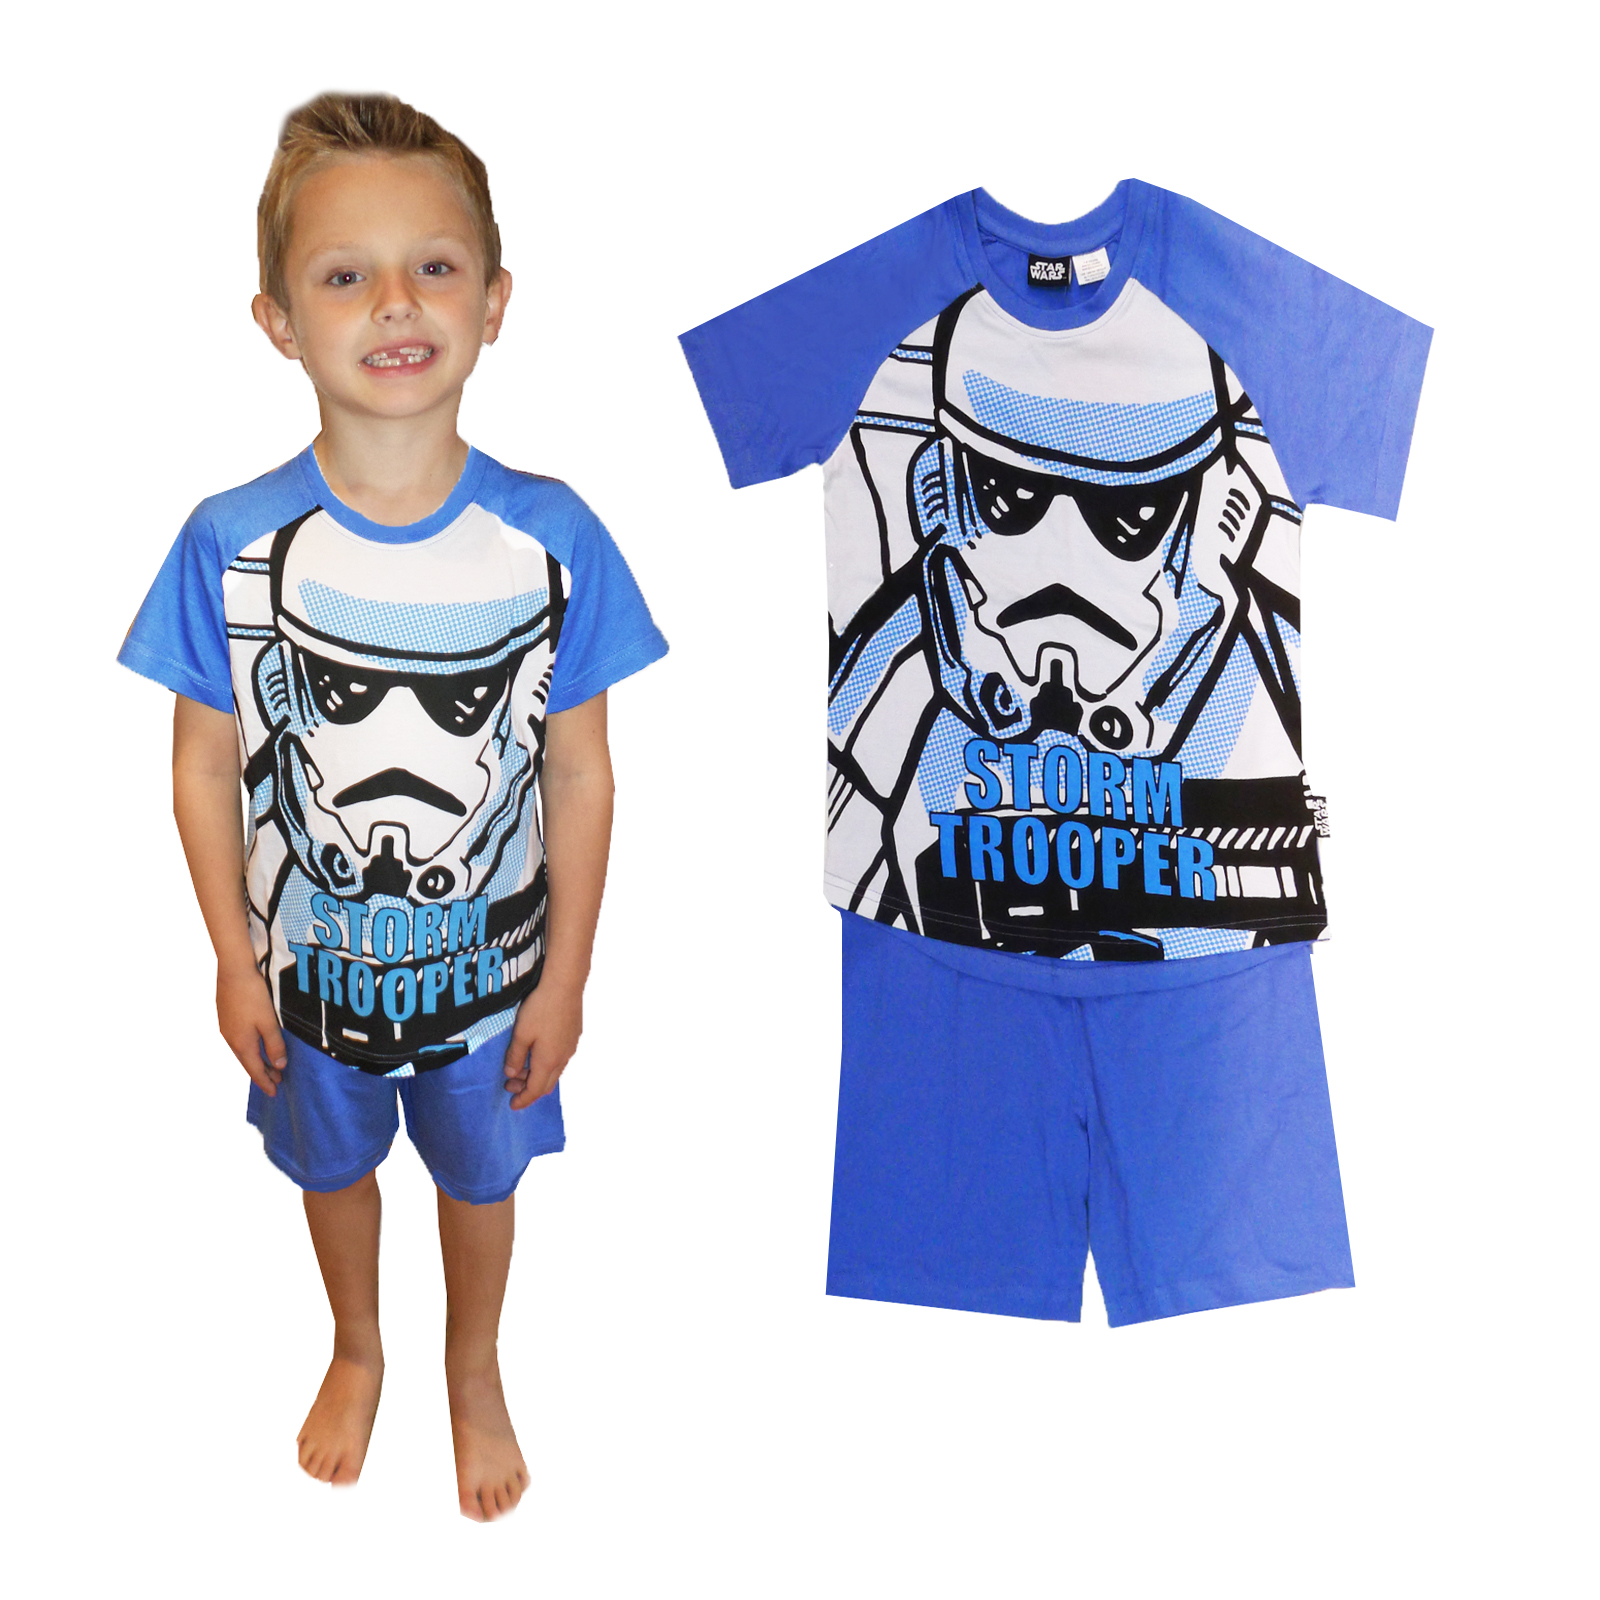 Star Wars PyjamasBoys Stormtrooper Pyjama SetKids Star Wars Short PJs